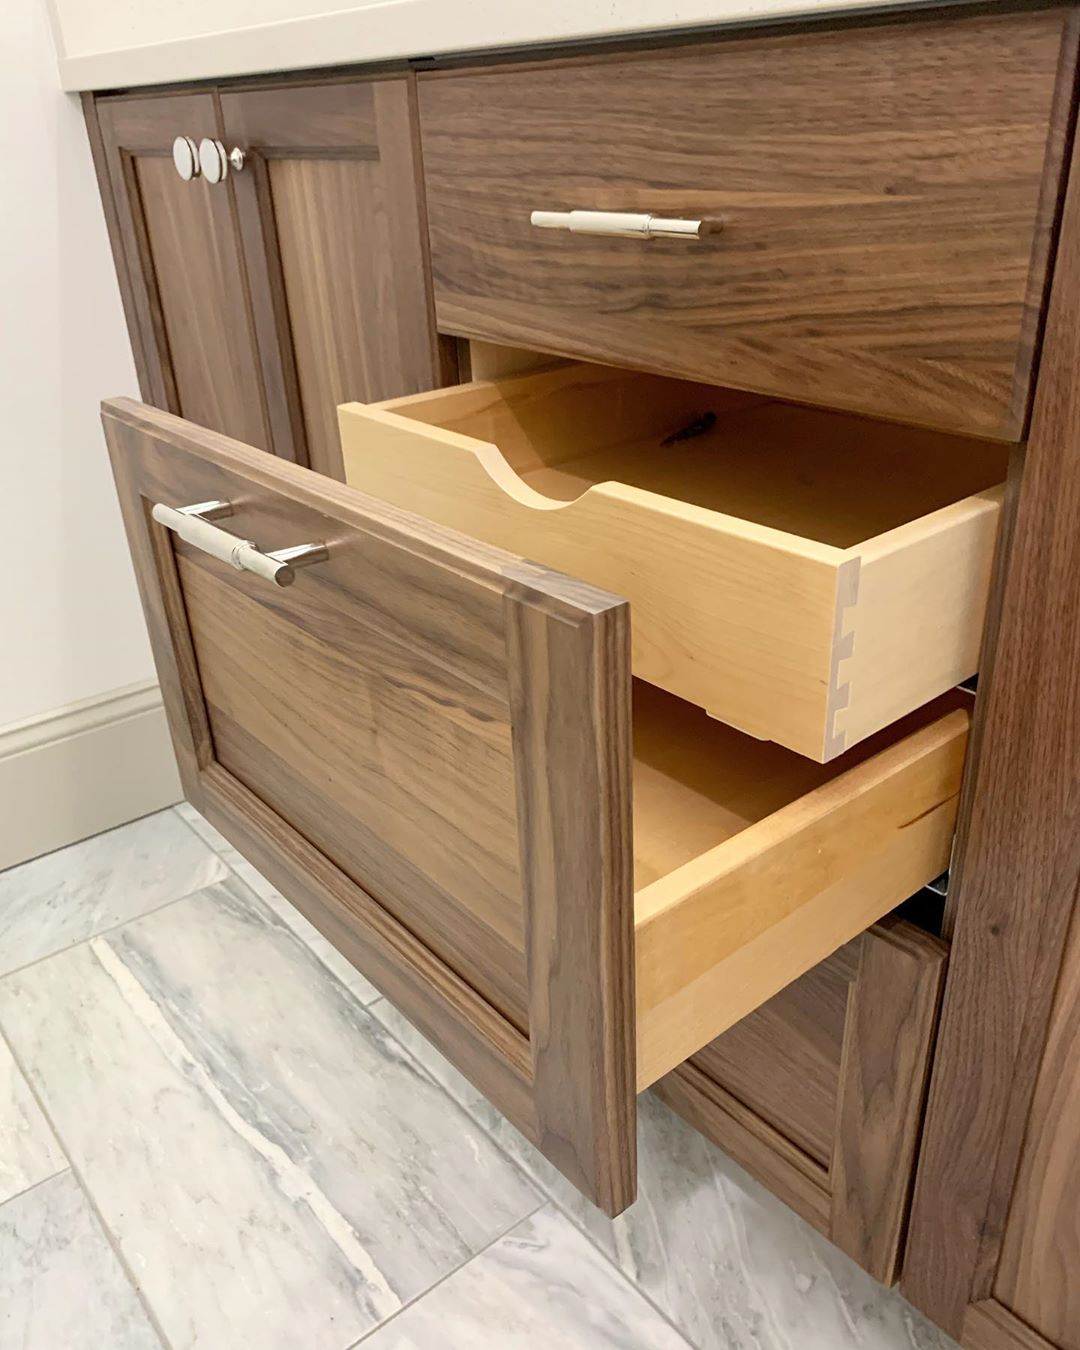 Hidden double drawers in a bathroom vanity. Photo by Instagram user @edenn_design